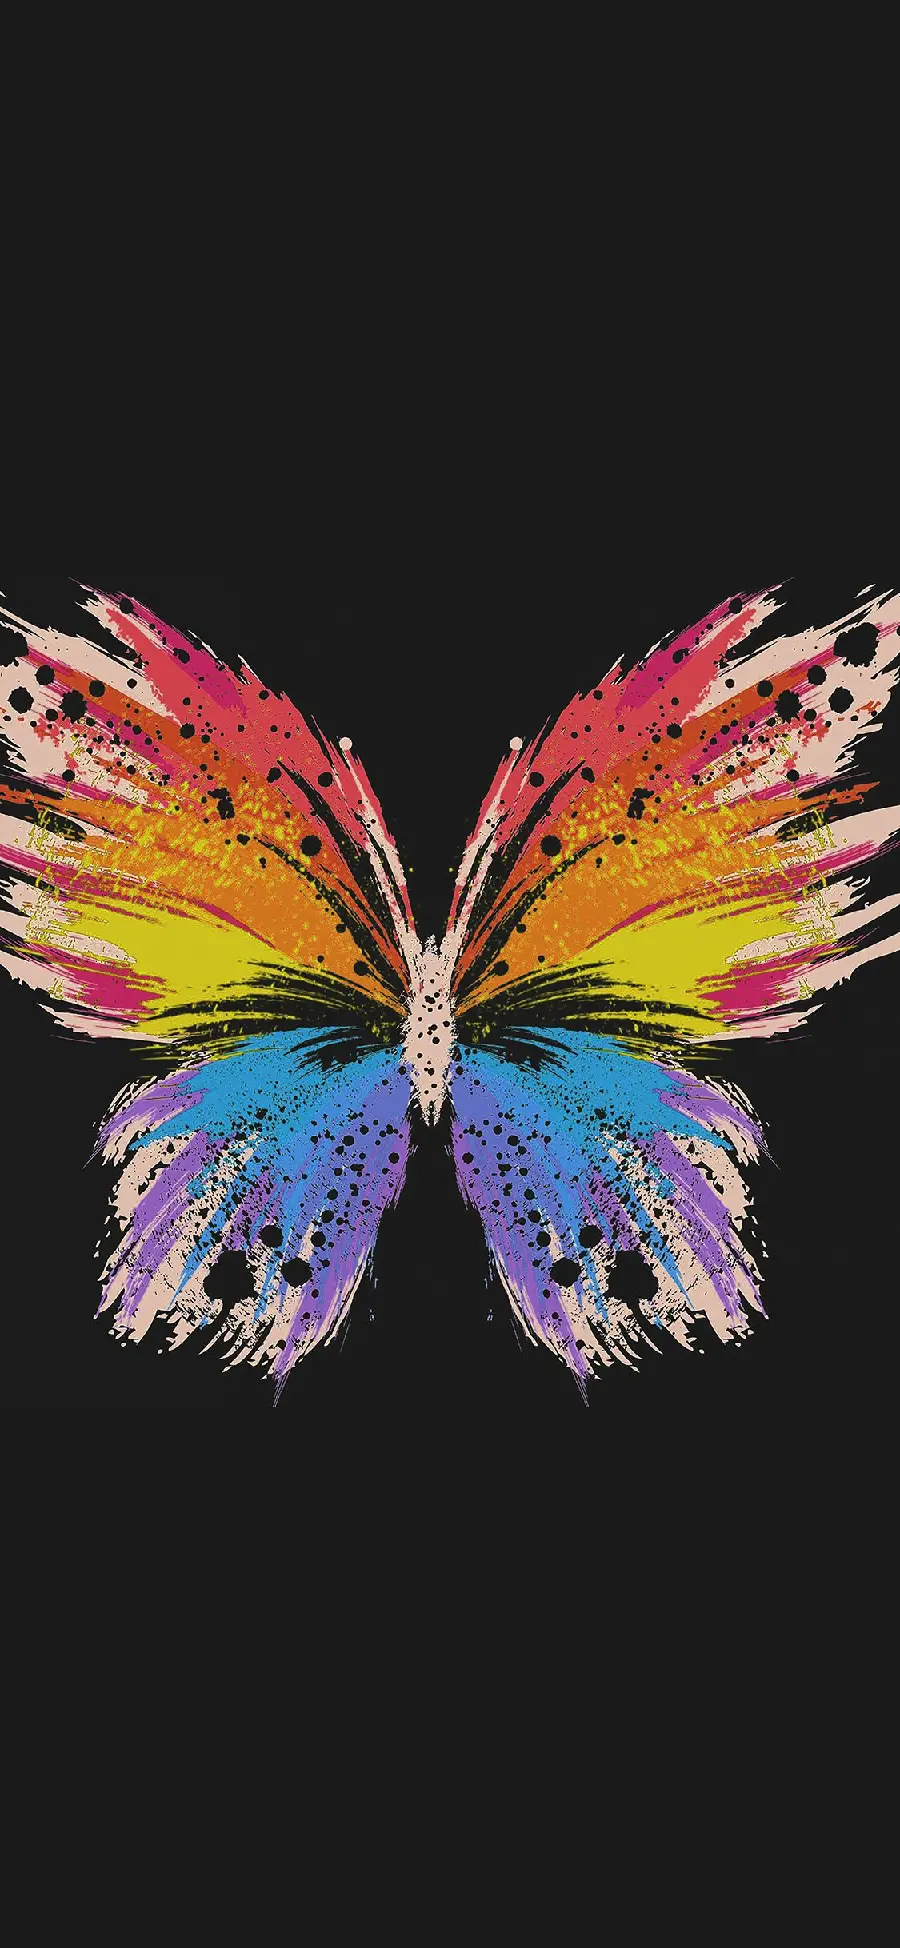 Wallpaper آیفون با زمینه مشکی با طرح پروانه رنگارنگ ناز آبرنگی